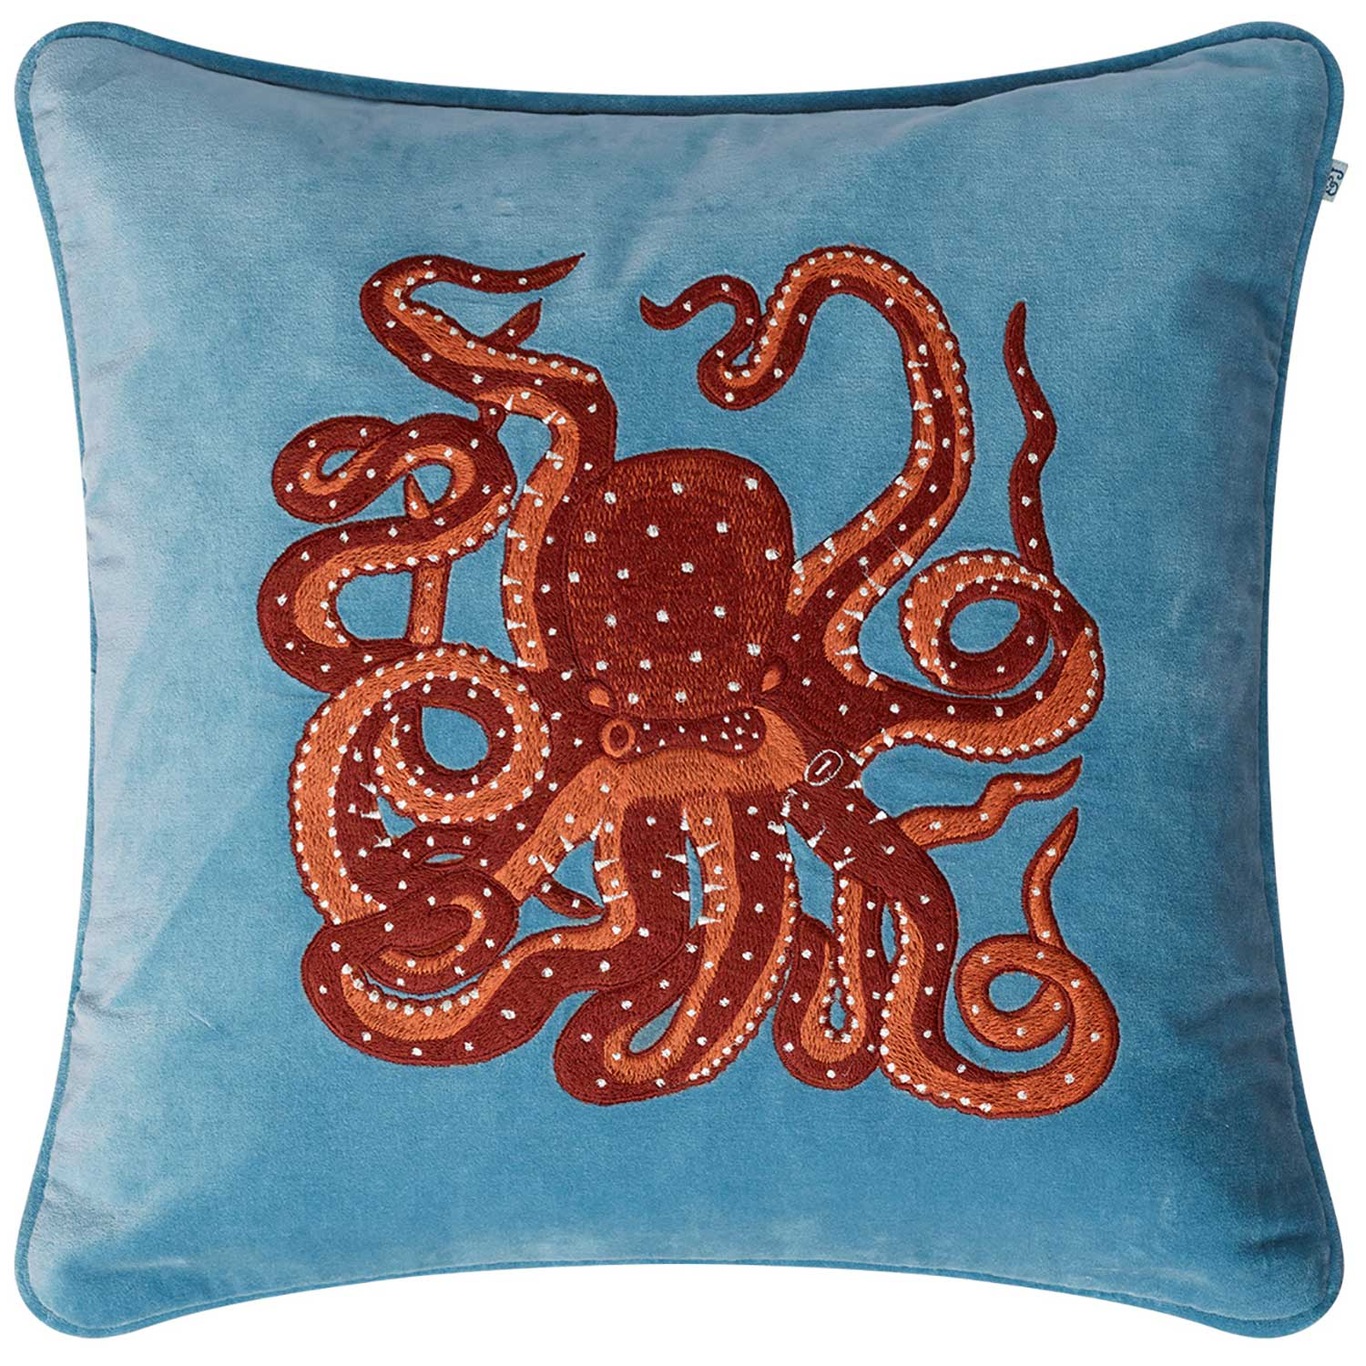 Octopus Cushion Cover 50x50 cm, Heaven Blue